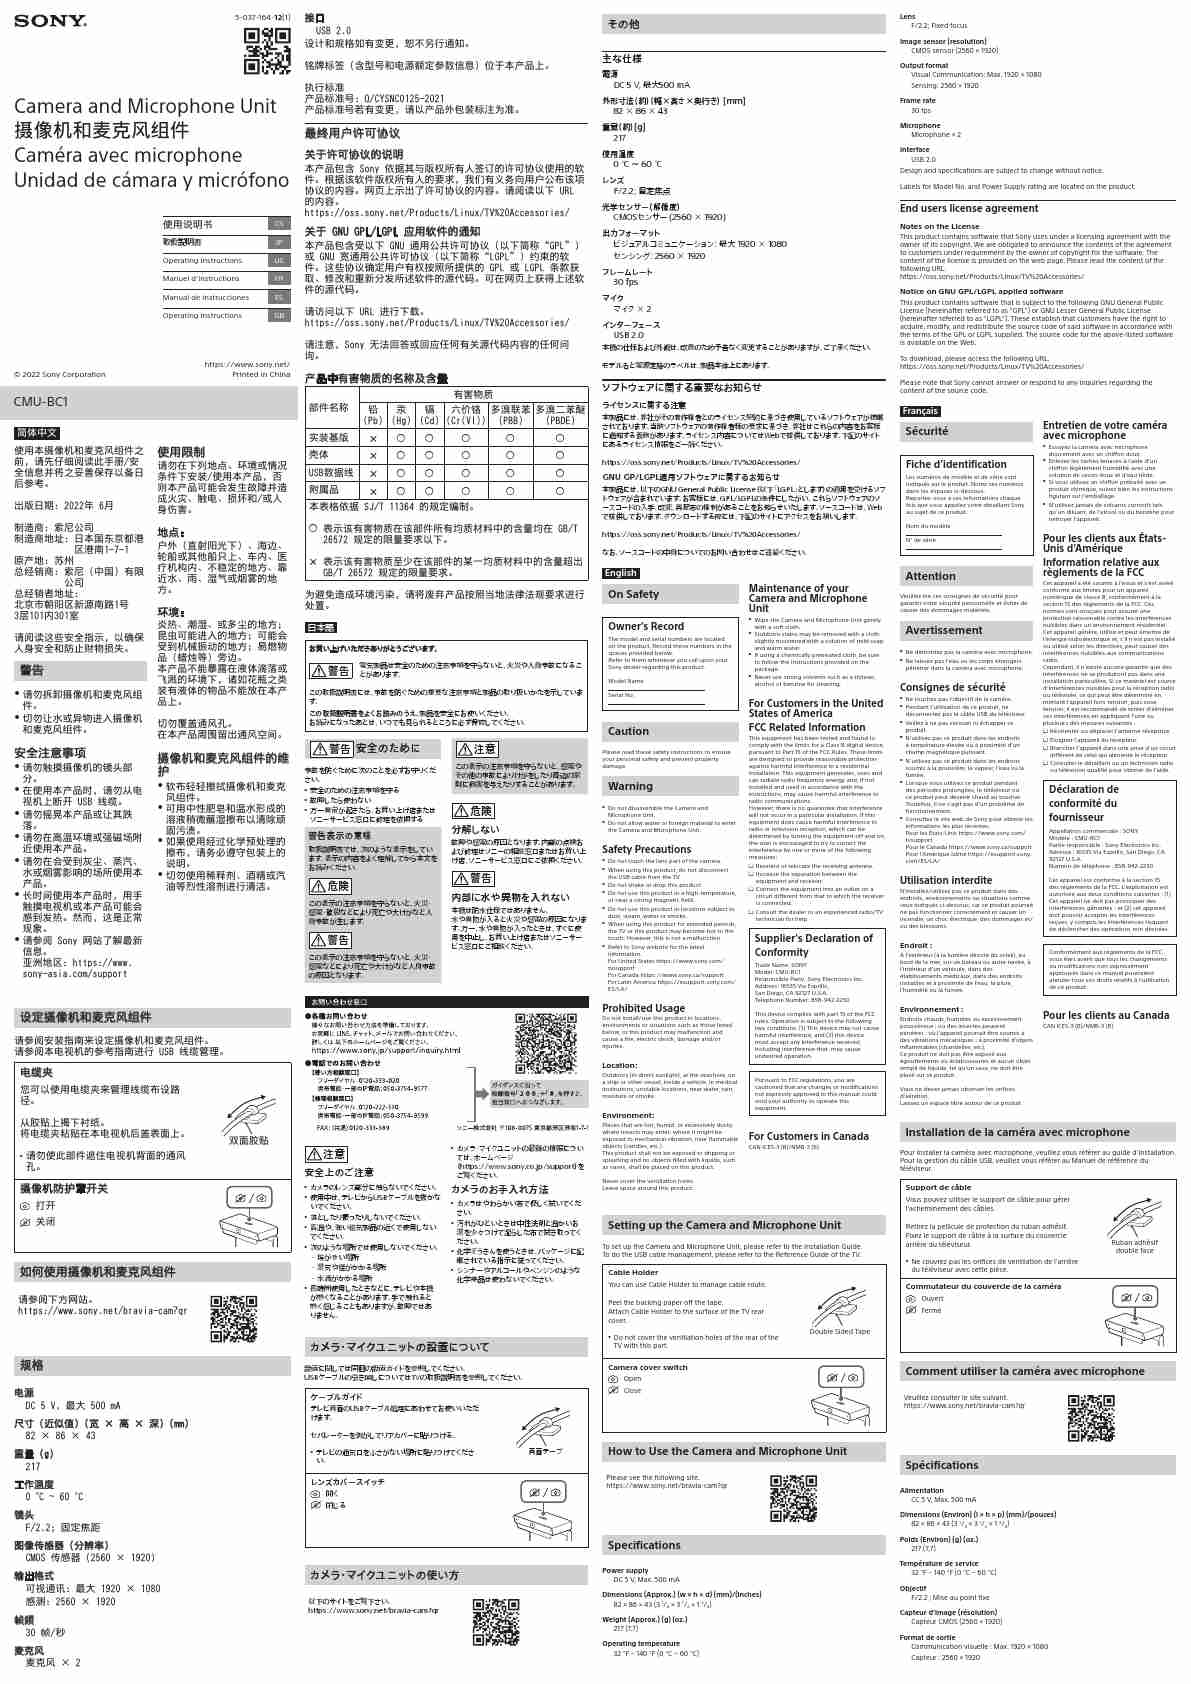 SONY CMU-BC1-page_pdf